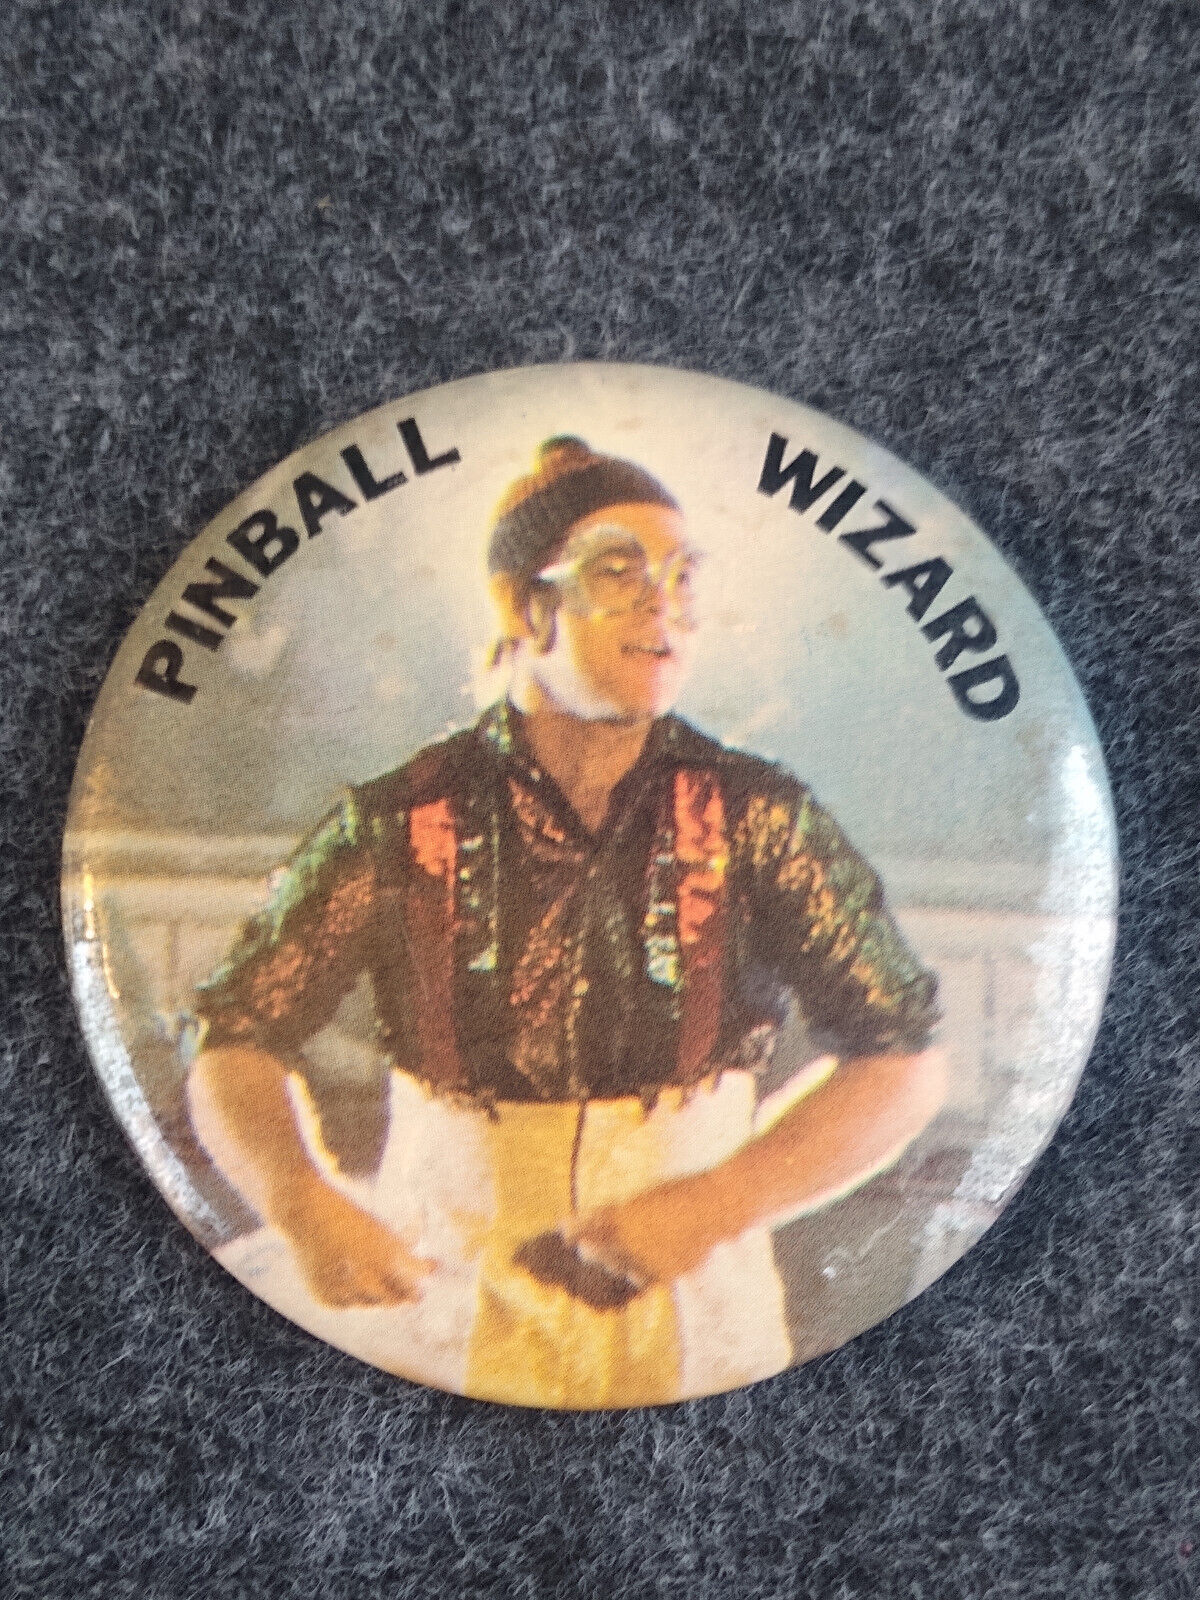  Elton John Pinball Wizard Pin Back Button Vintage 2”